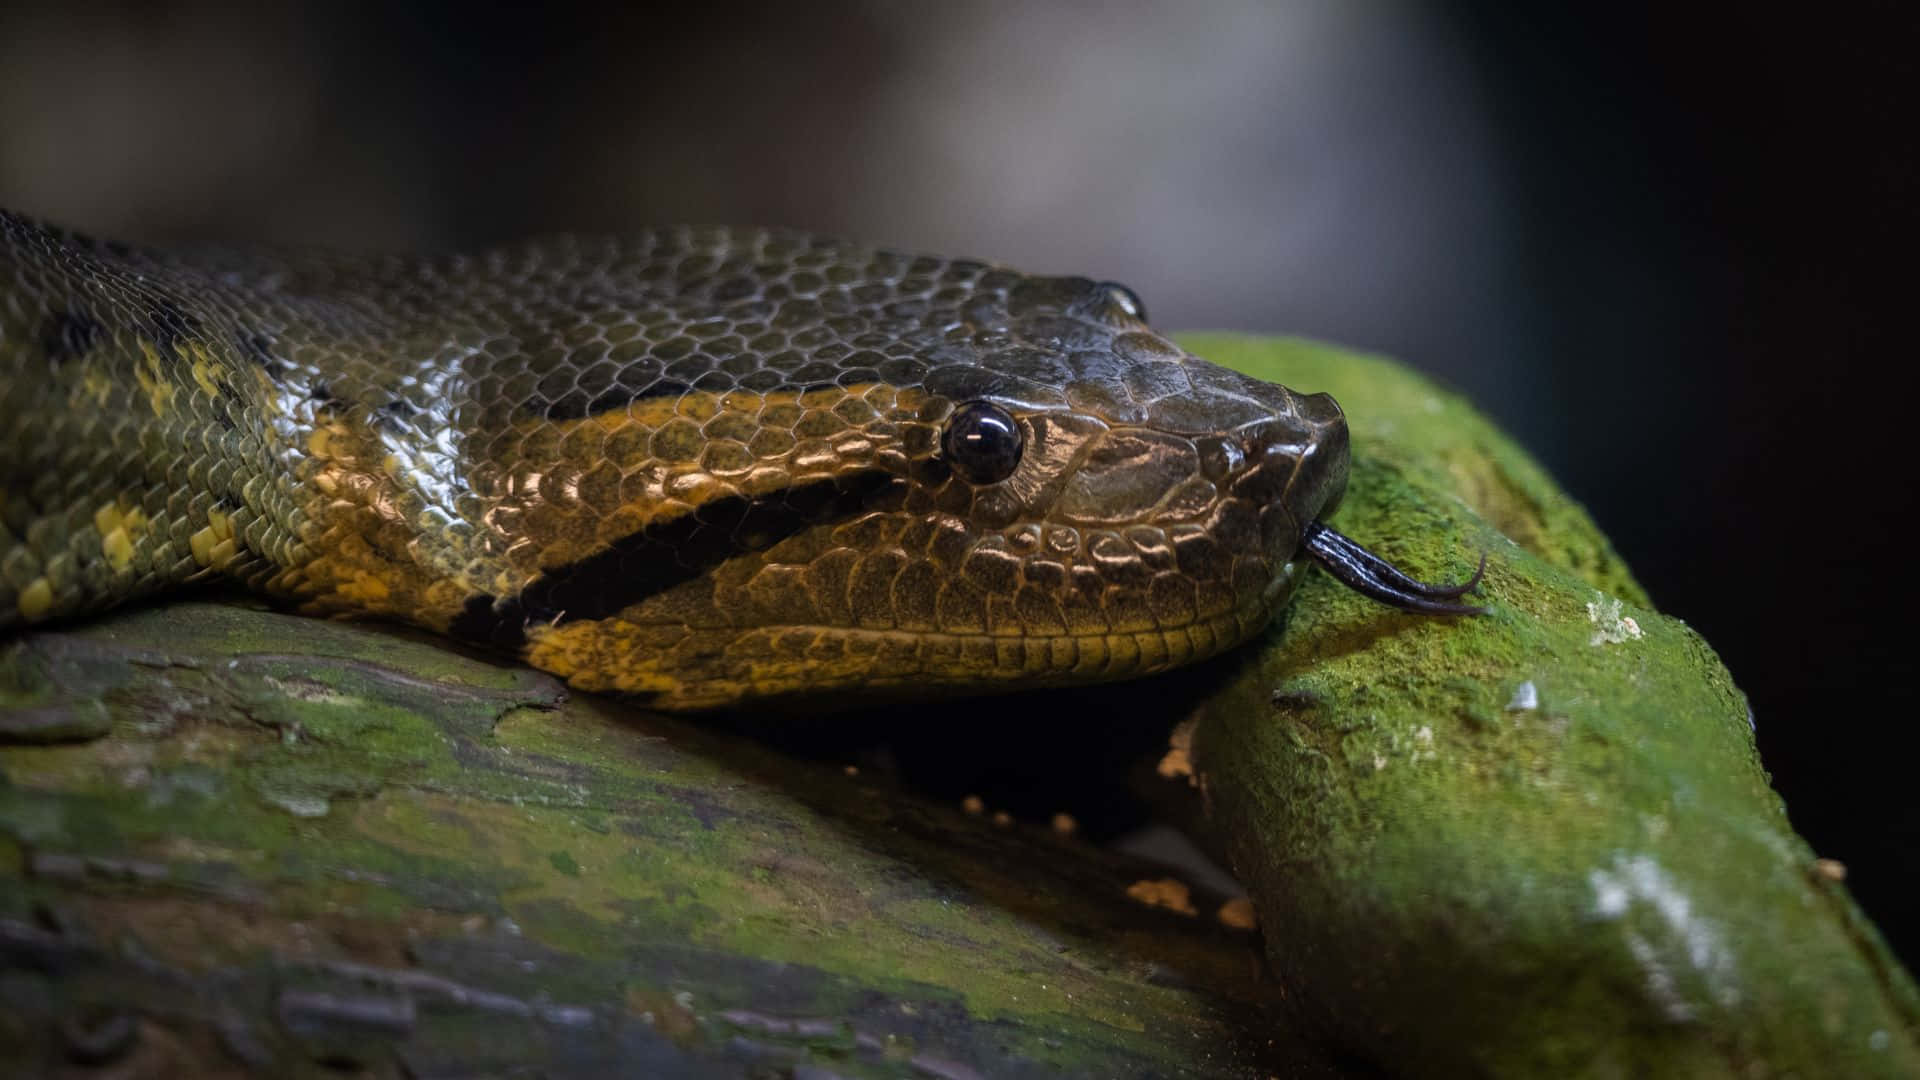 Premium Photo, Anaconda snake eye close up